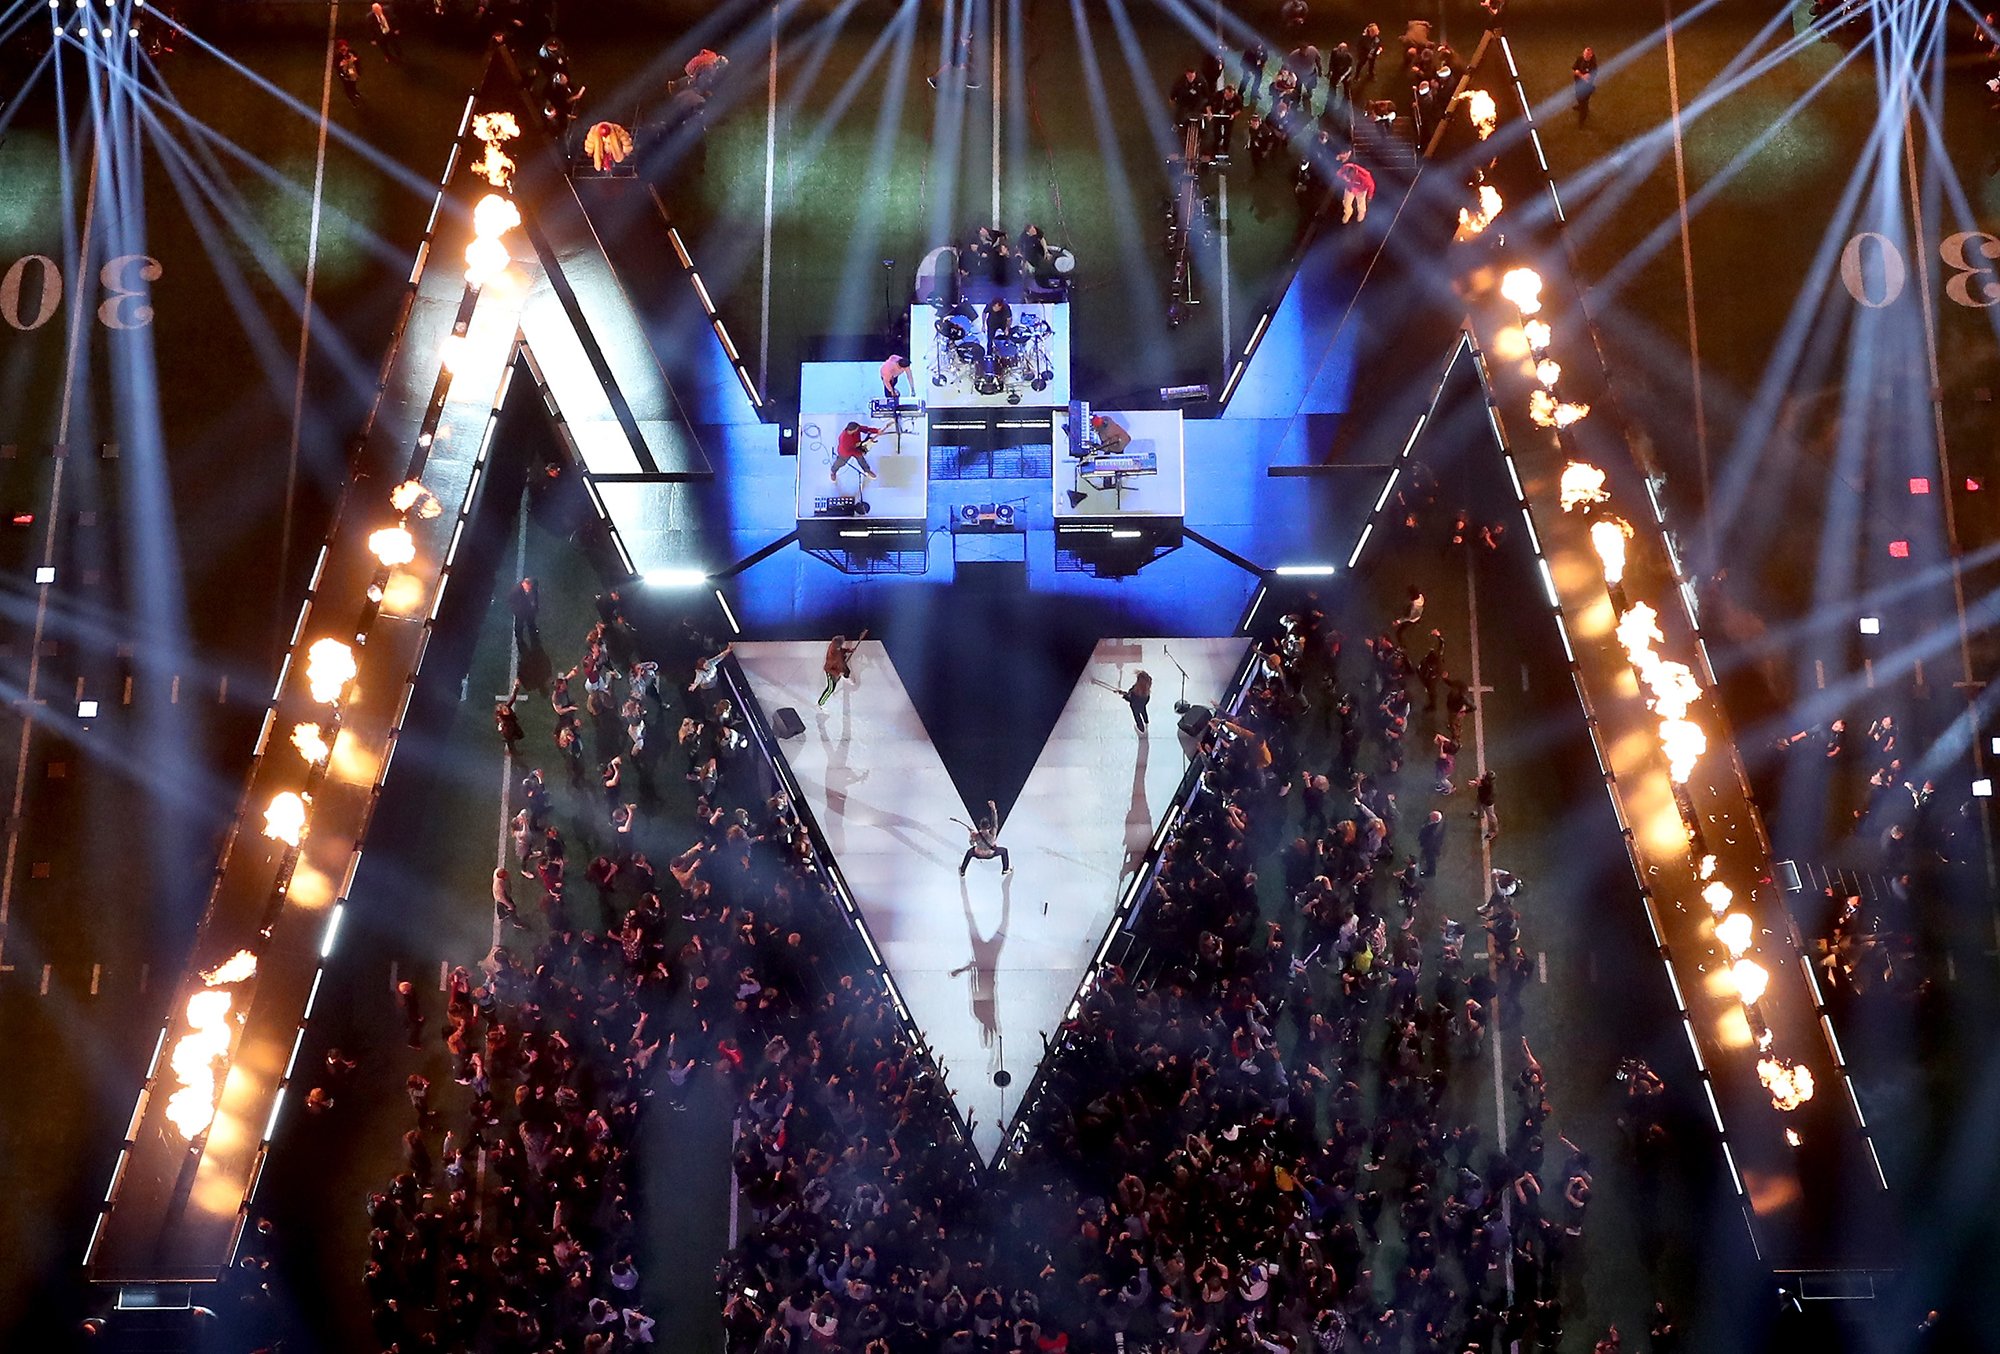 Production design and concert stage design for Super Bowl LIII Halftime Show